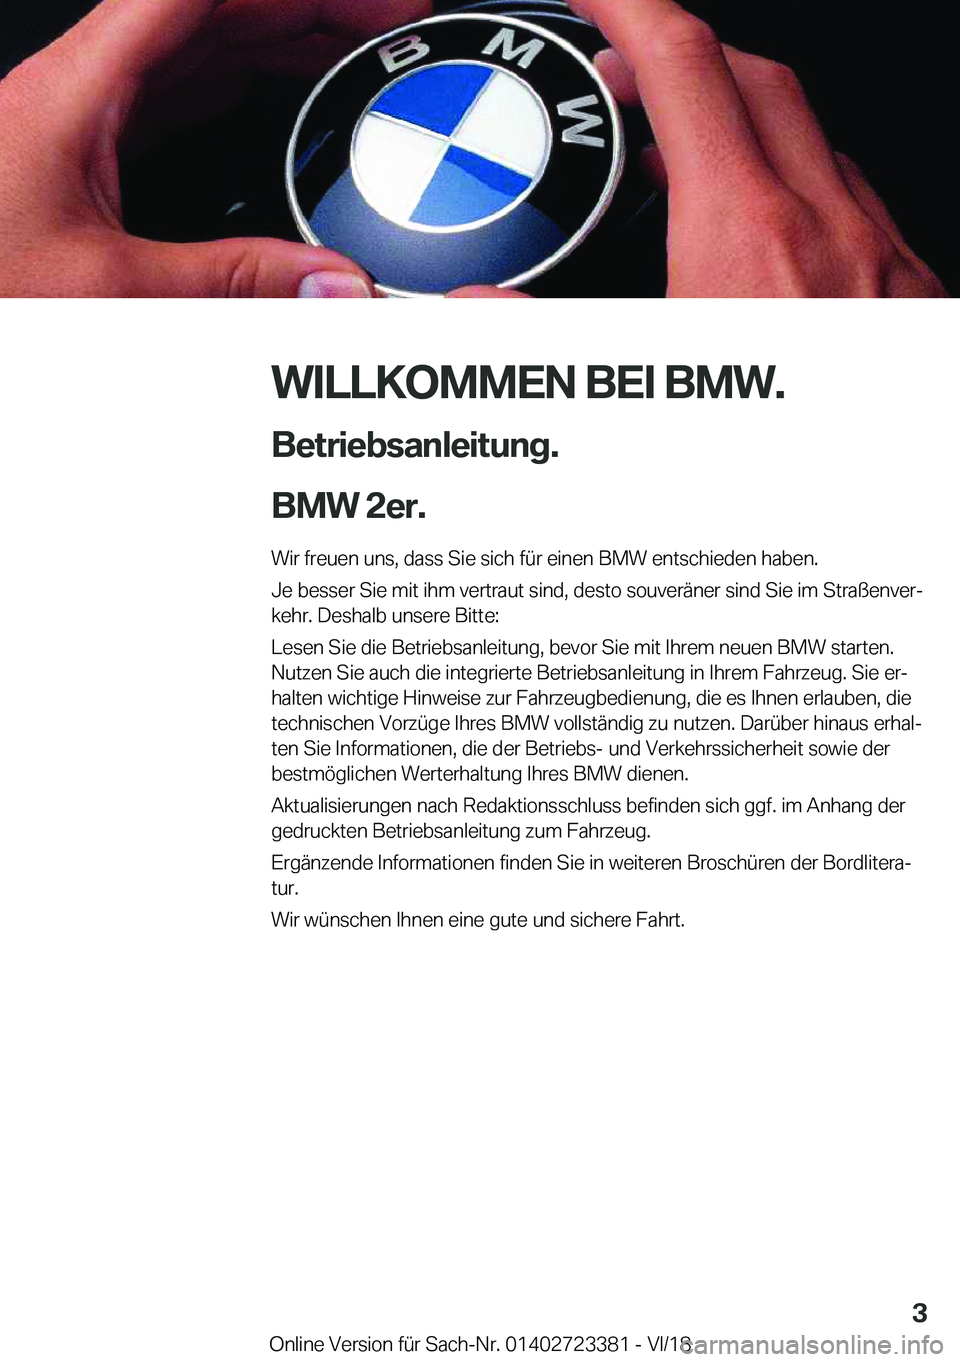 BMW 2 SERIES COUPE 2019  Betriebsanleitungen (in German) �W�I�L�L�K�O�M�M�E�N��B�E�I��B�M�W�.�B�e�t�r�i�e�b�s�a�n�l�e�i�t�u�n�g�.
�B�M�W��2�e�r�.�
�W�i�r��f�r�e�u�e�n��u�n�s�,��d�a�s�s��S�i�e��s�i�c�h��f�